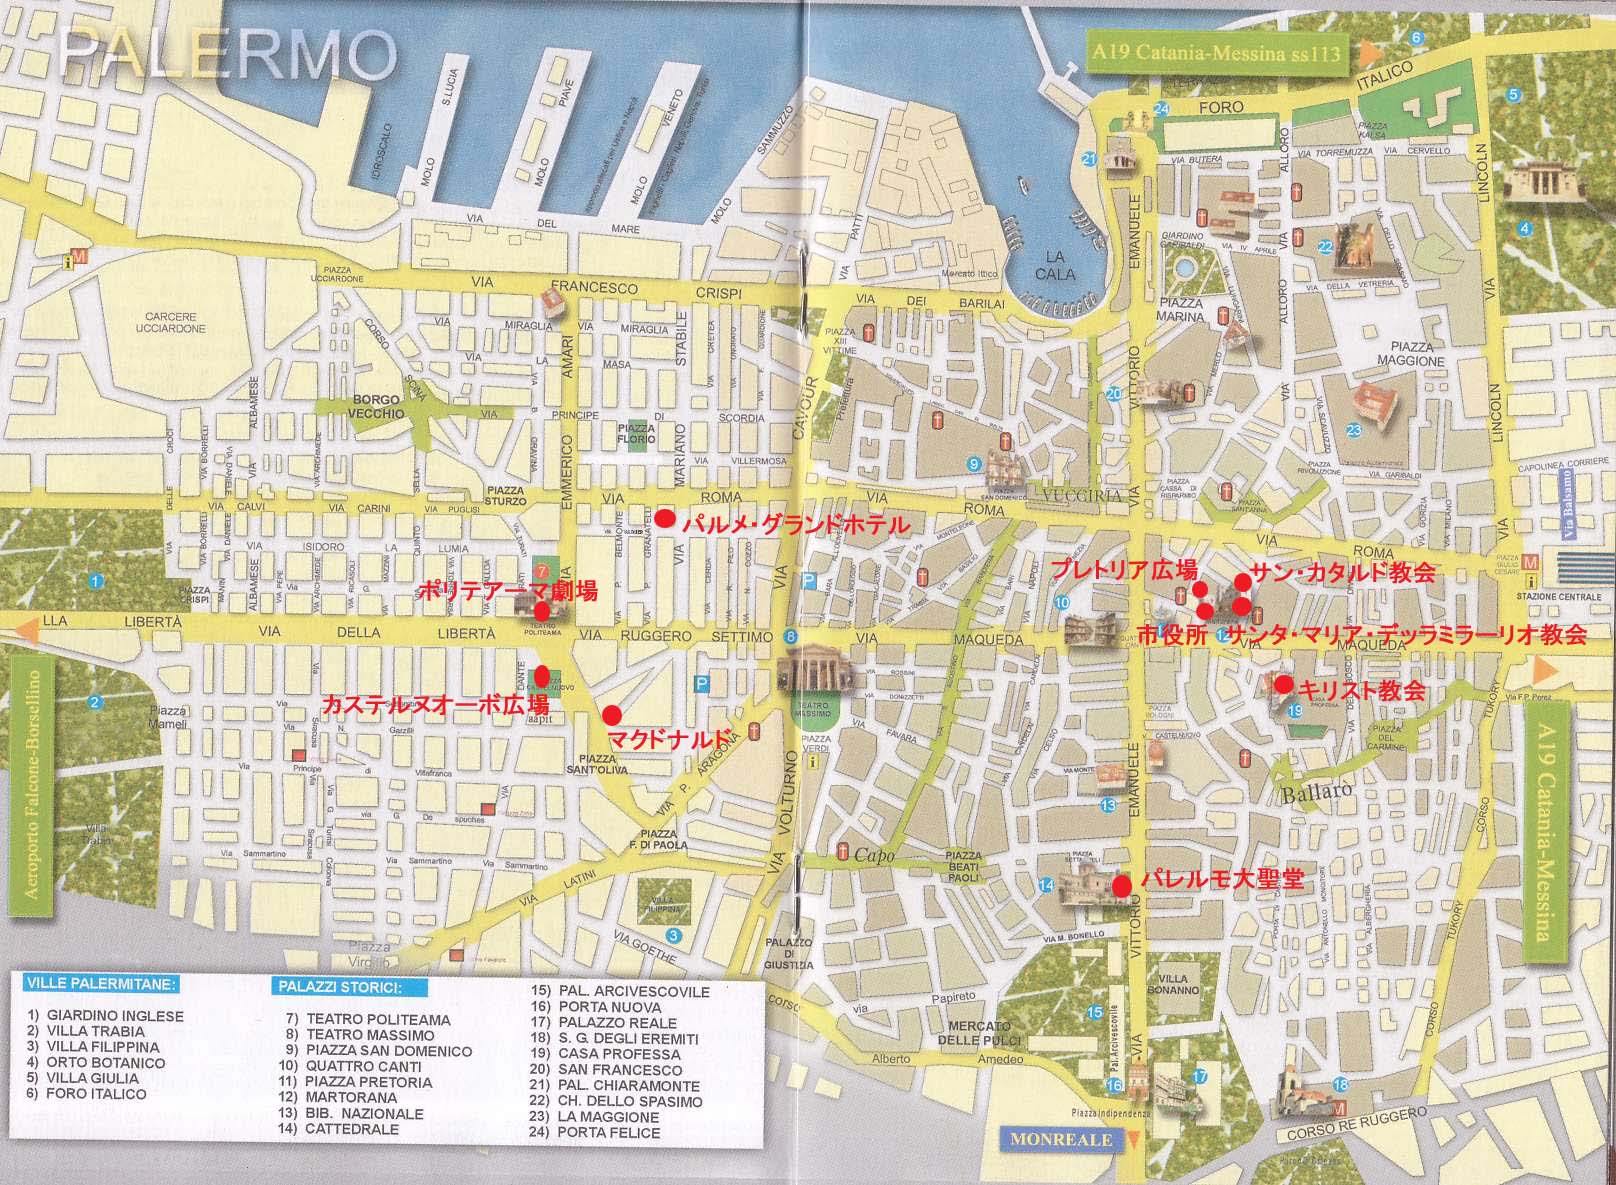 Palermo city center map